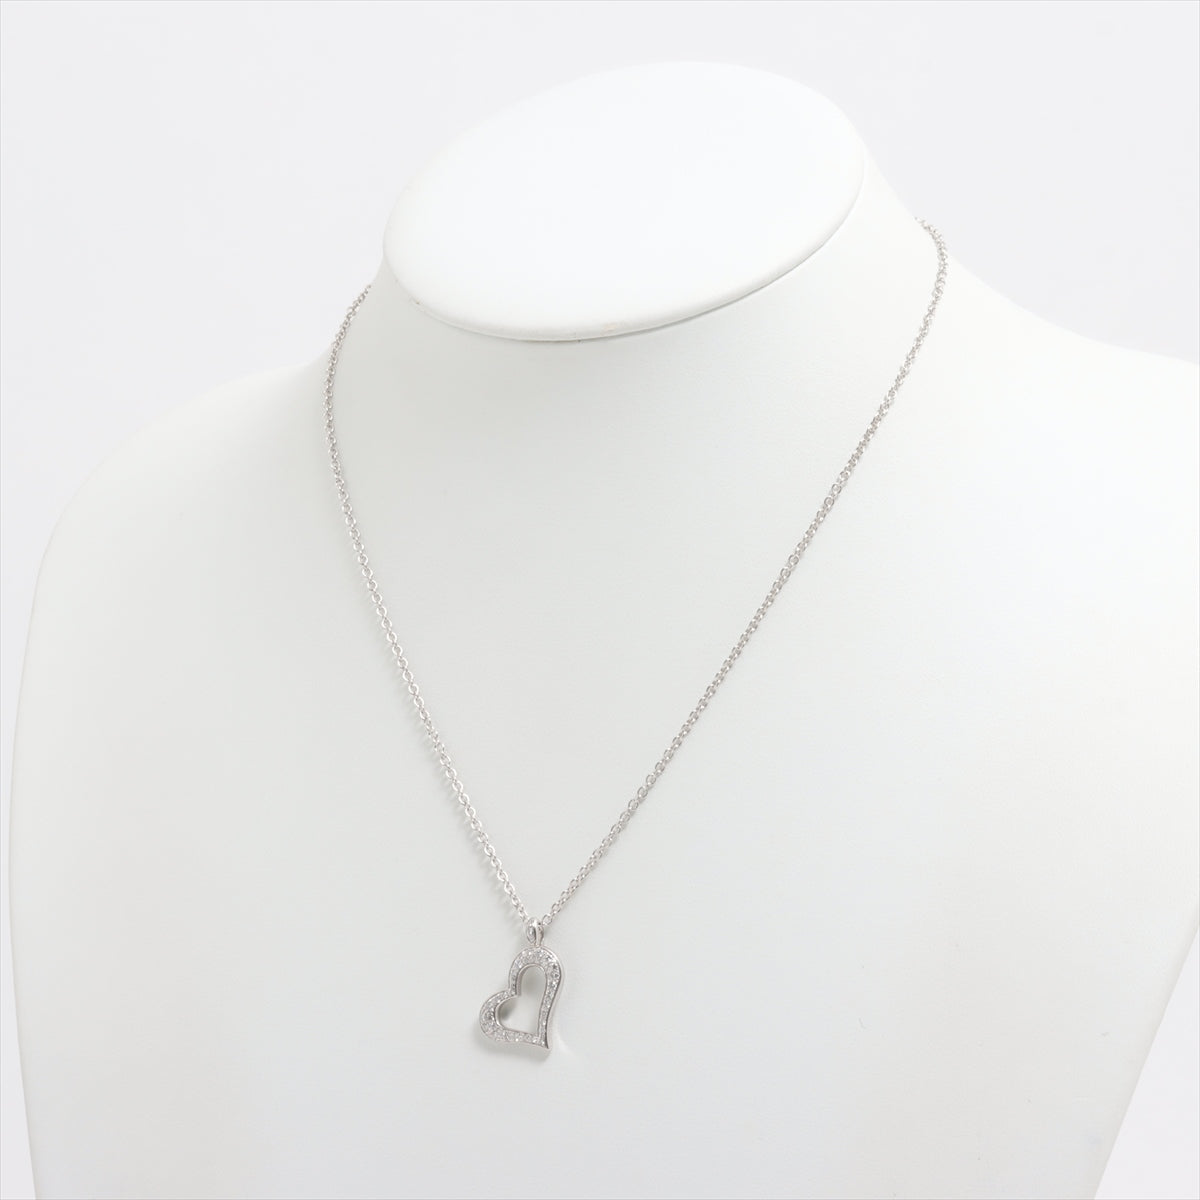 Piaget hearts Diamond Necklace 750(WG) 8.3g